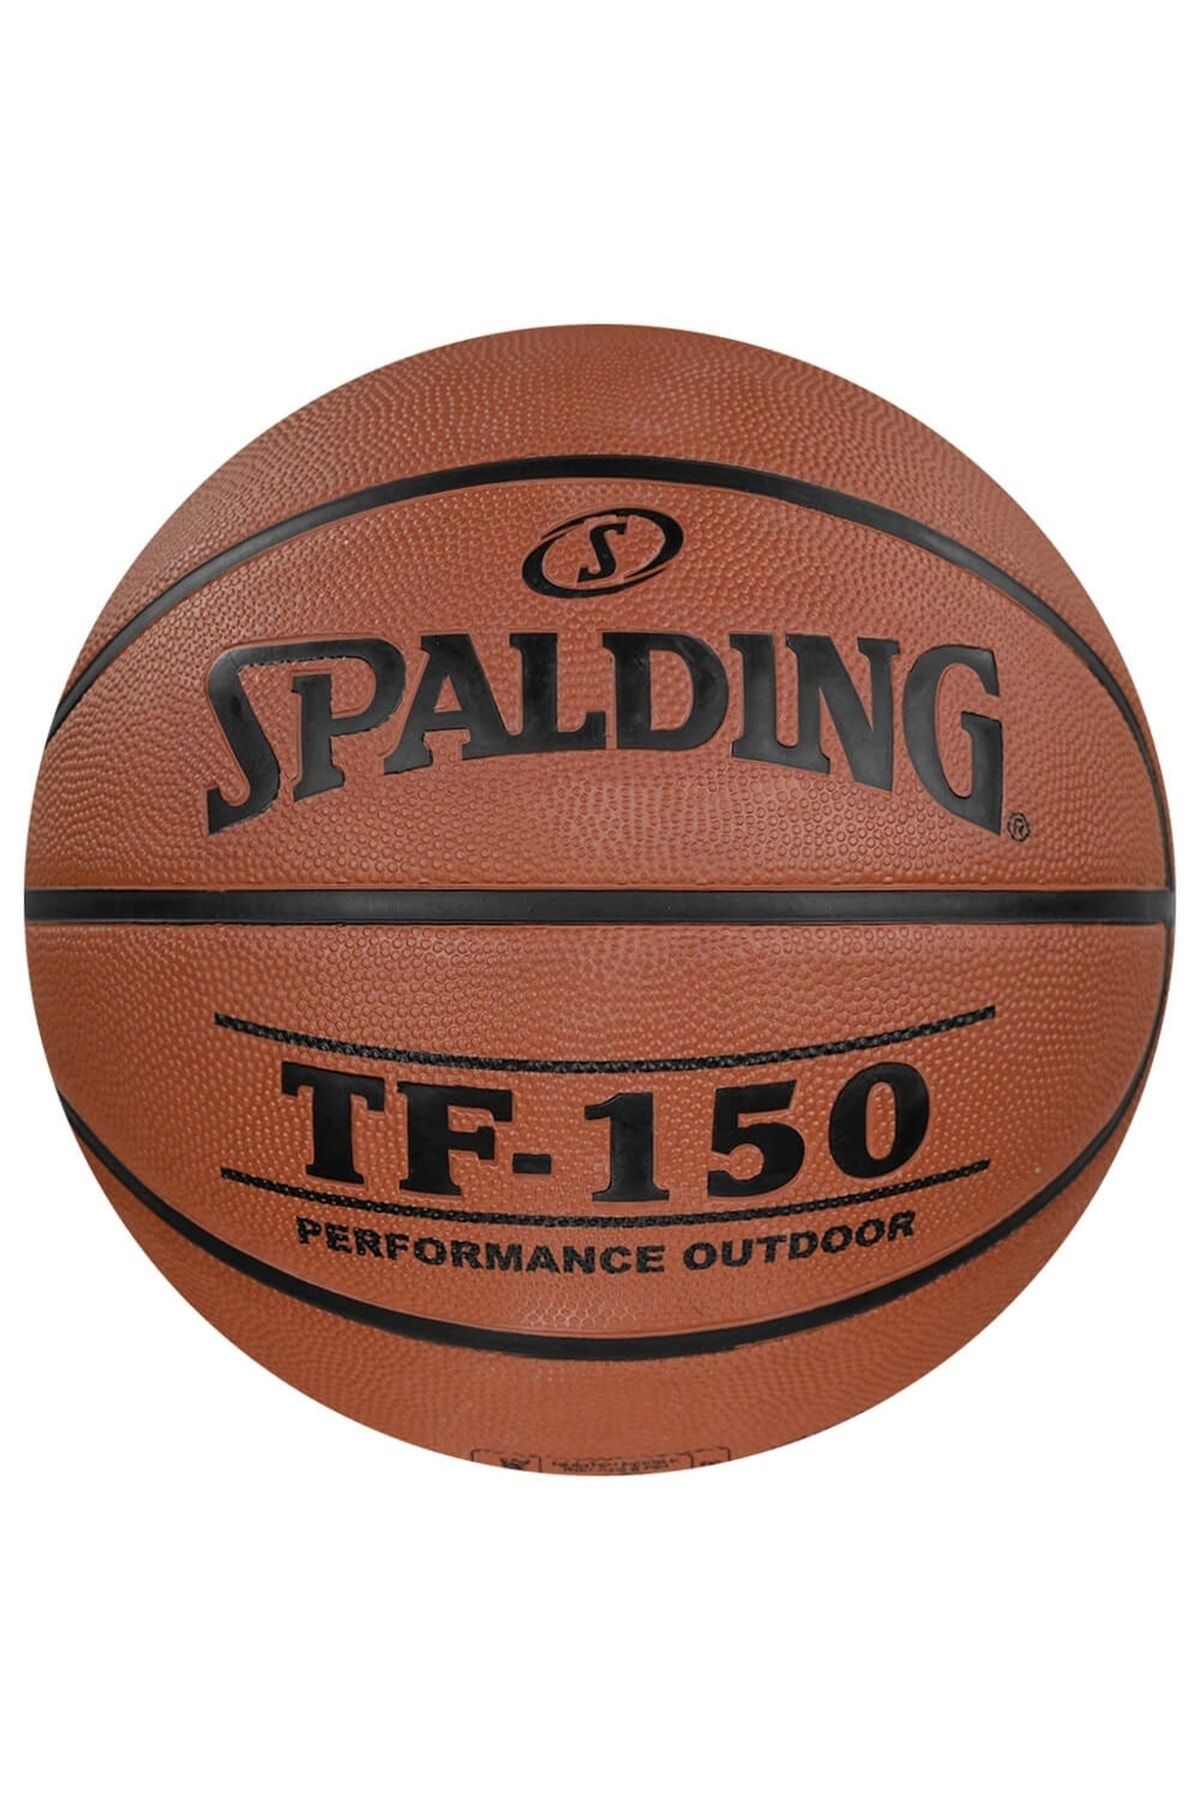 Spalding Tf-150 Kauçuk 5 No Basketbol Topu